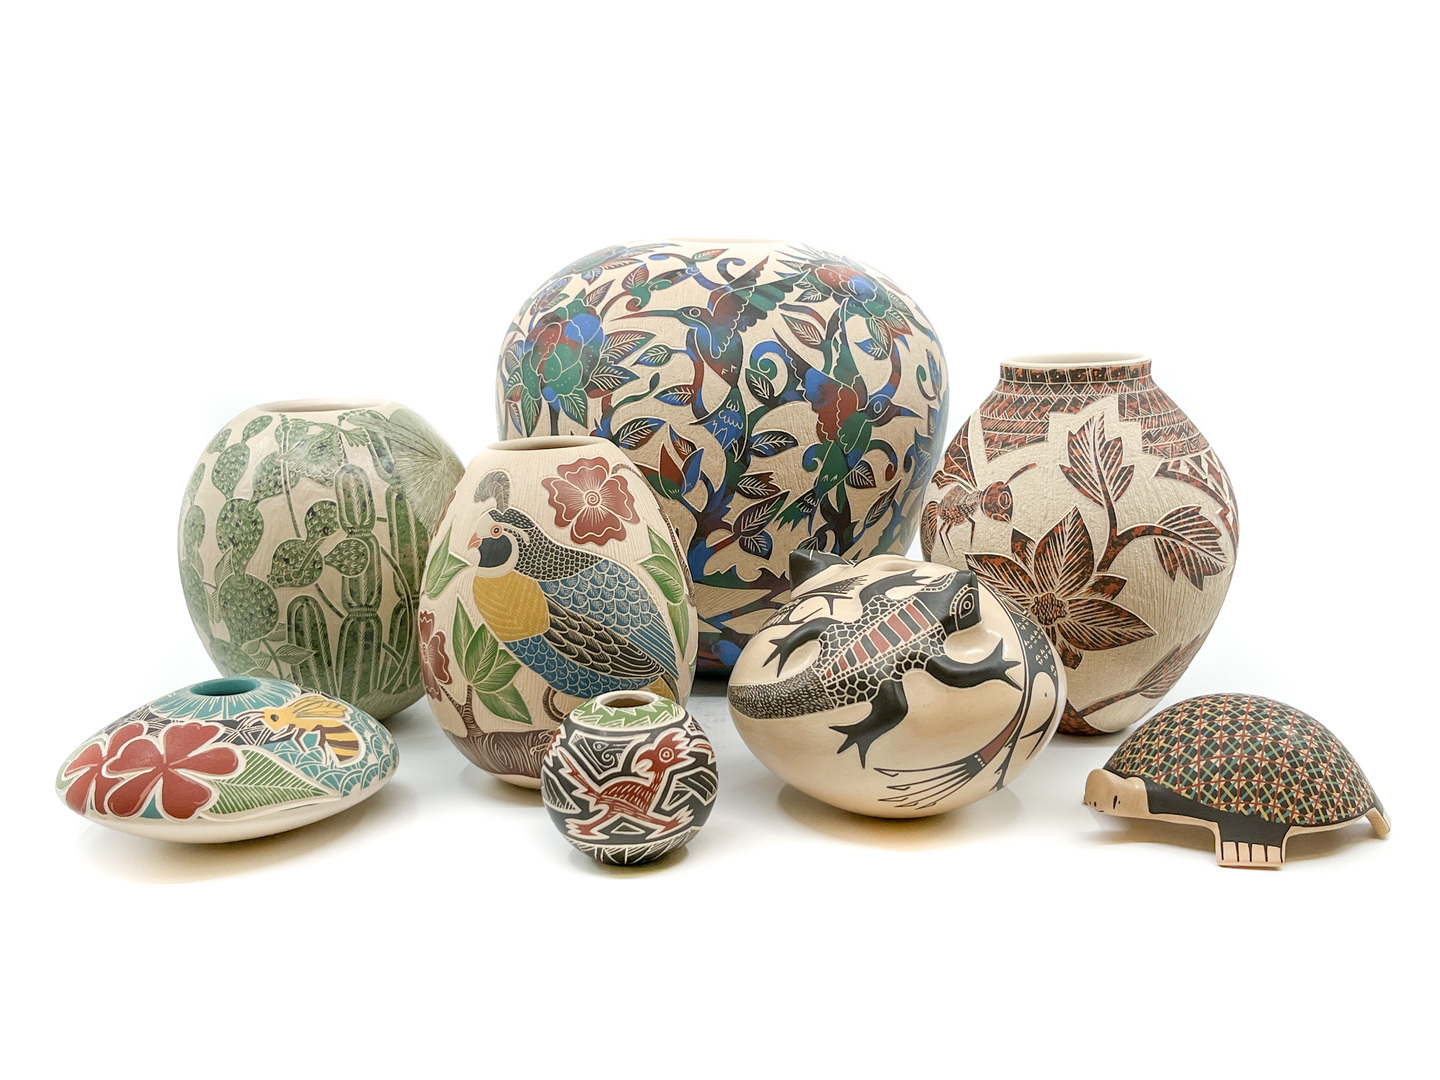 Mata Ortiz Online Pottery Show, Online Event